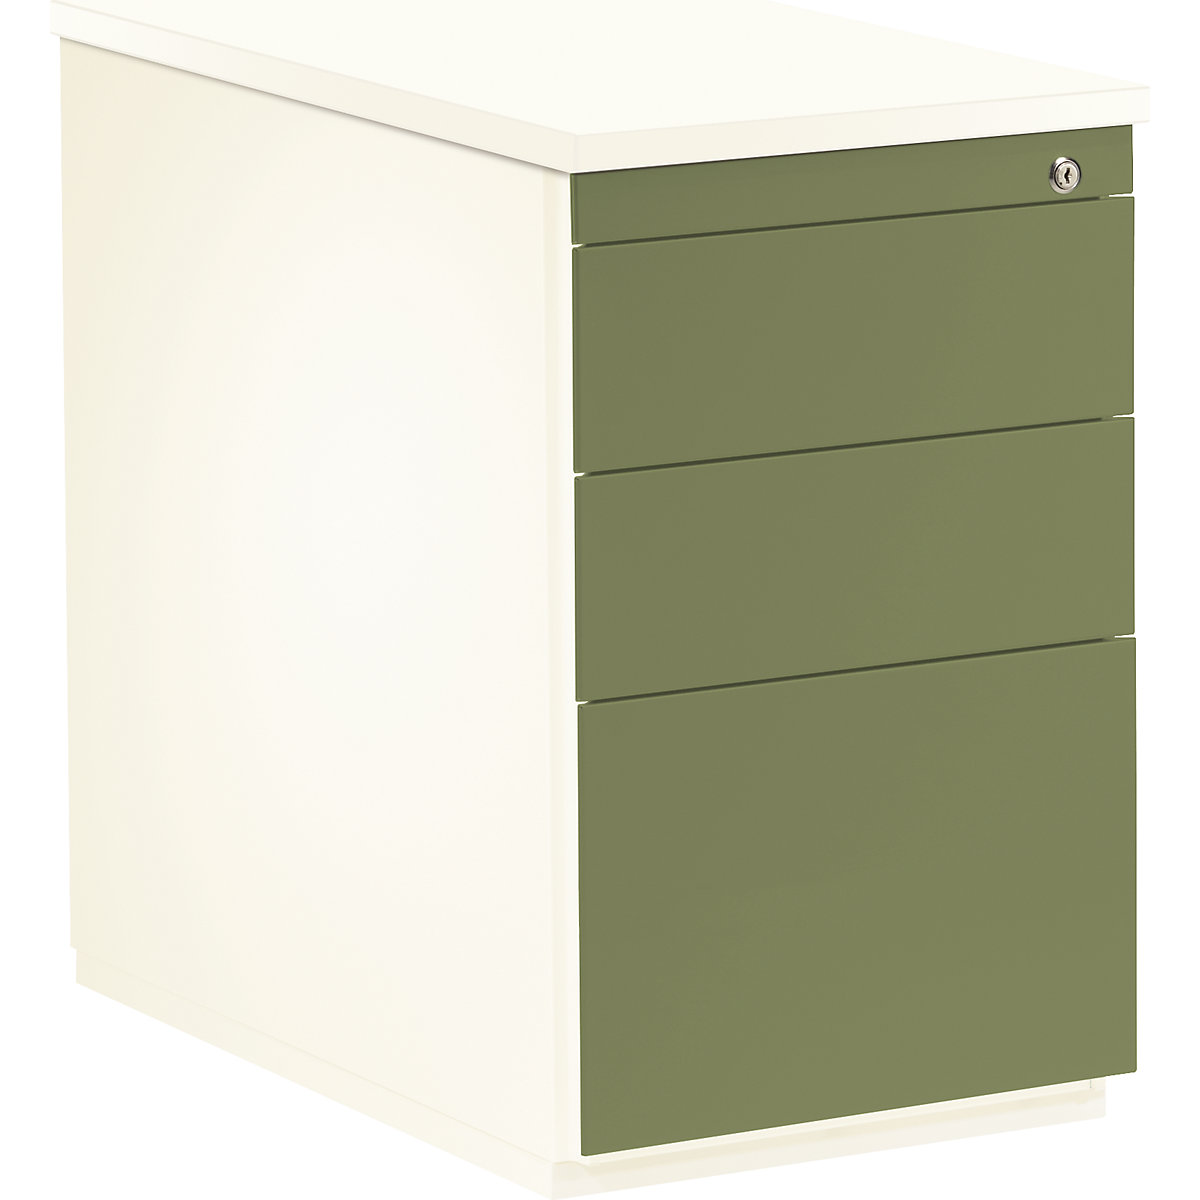 Zásuvkový kontejner – mauser, v x h 720 x 800 mm, 2 zásuvky na materiál, 1 kartotéka pro závěsné složky, čistá bílá / rákosová zelená / čistá bílá-14